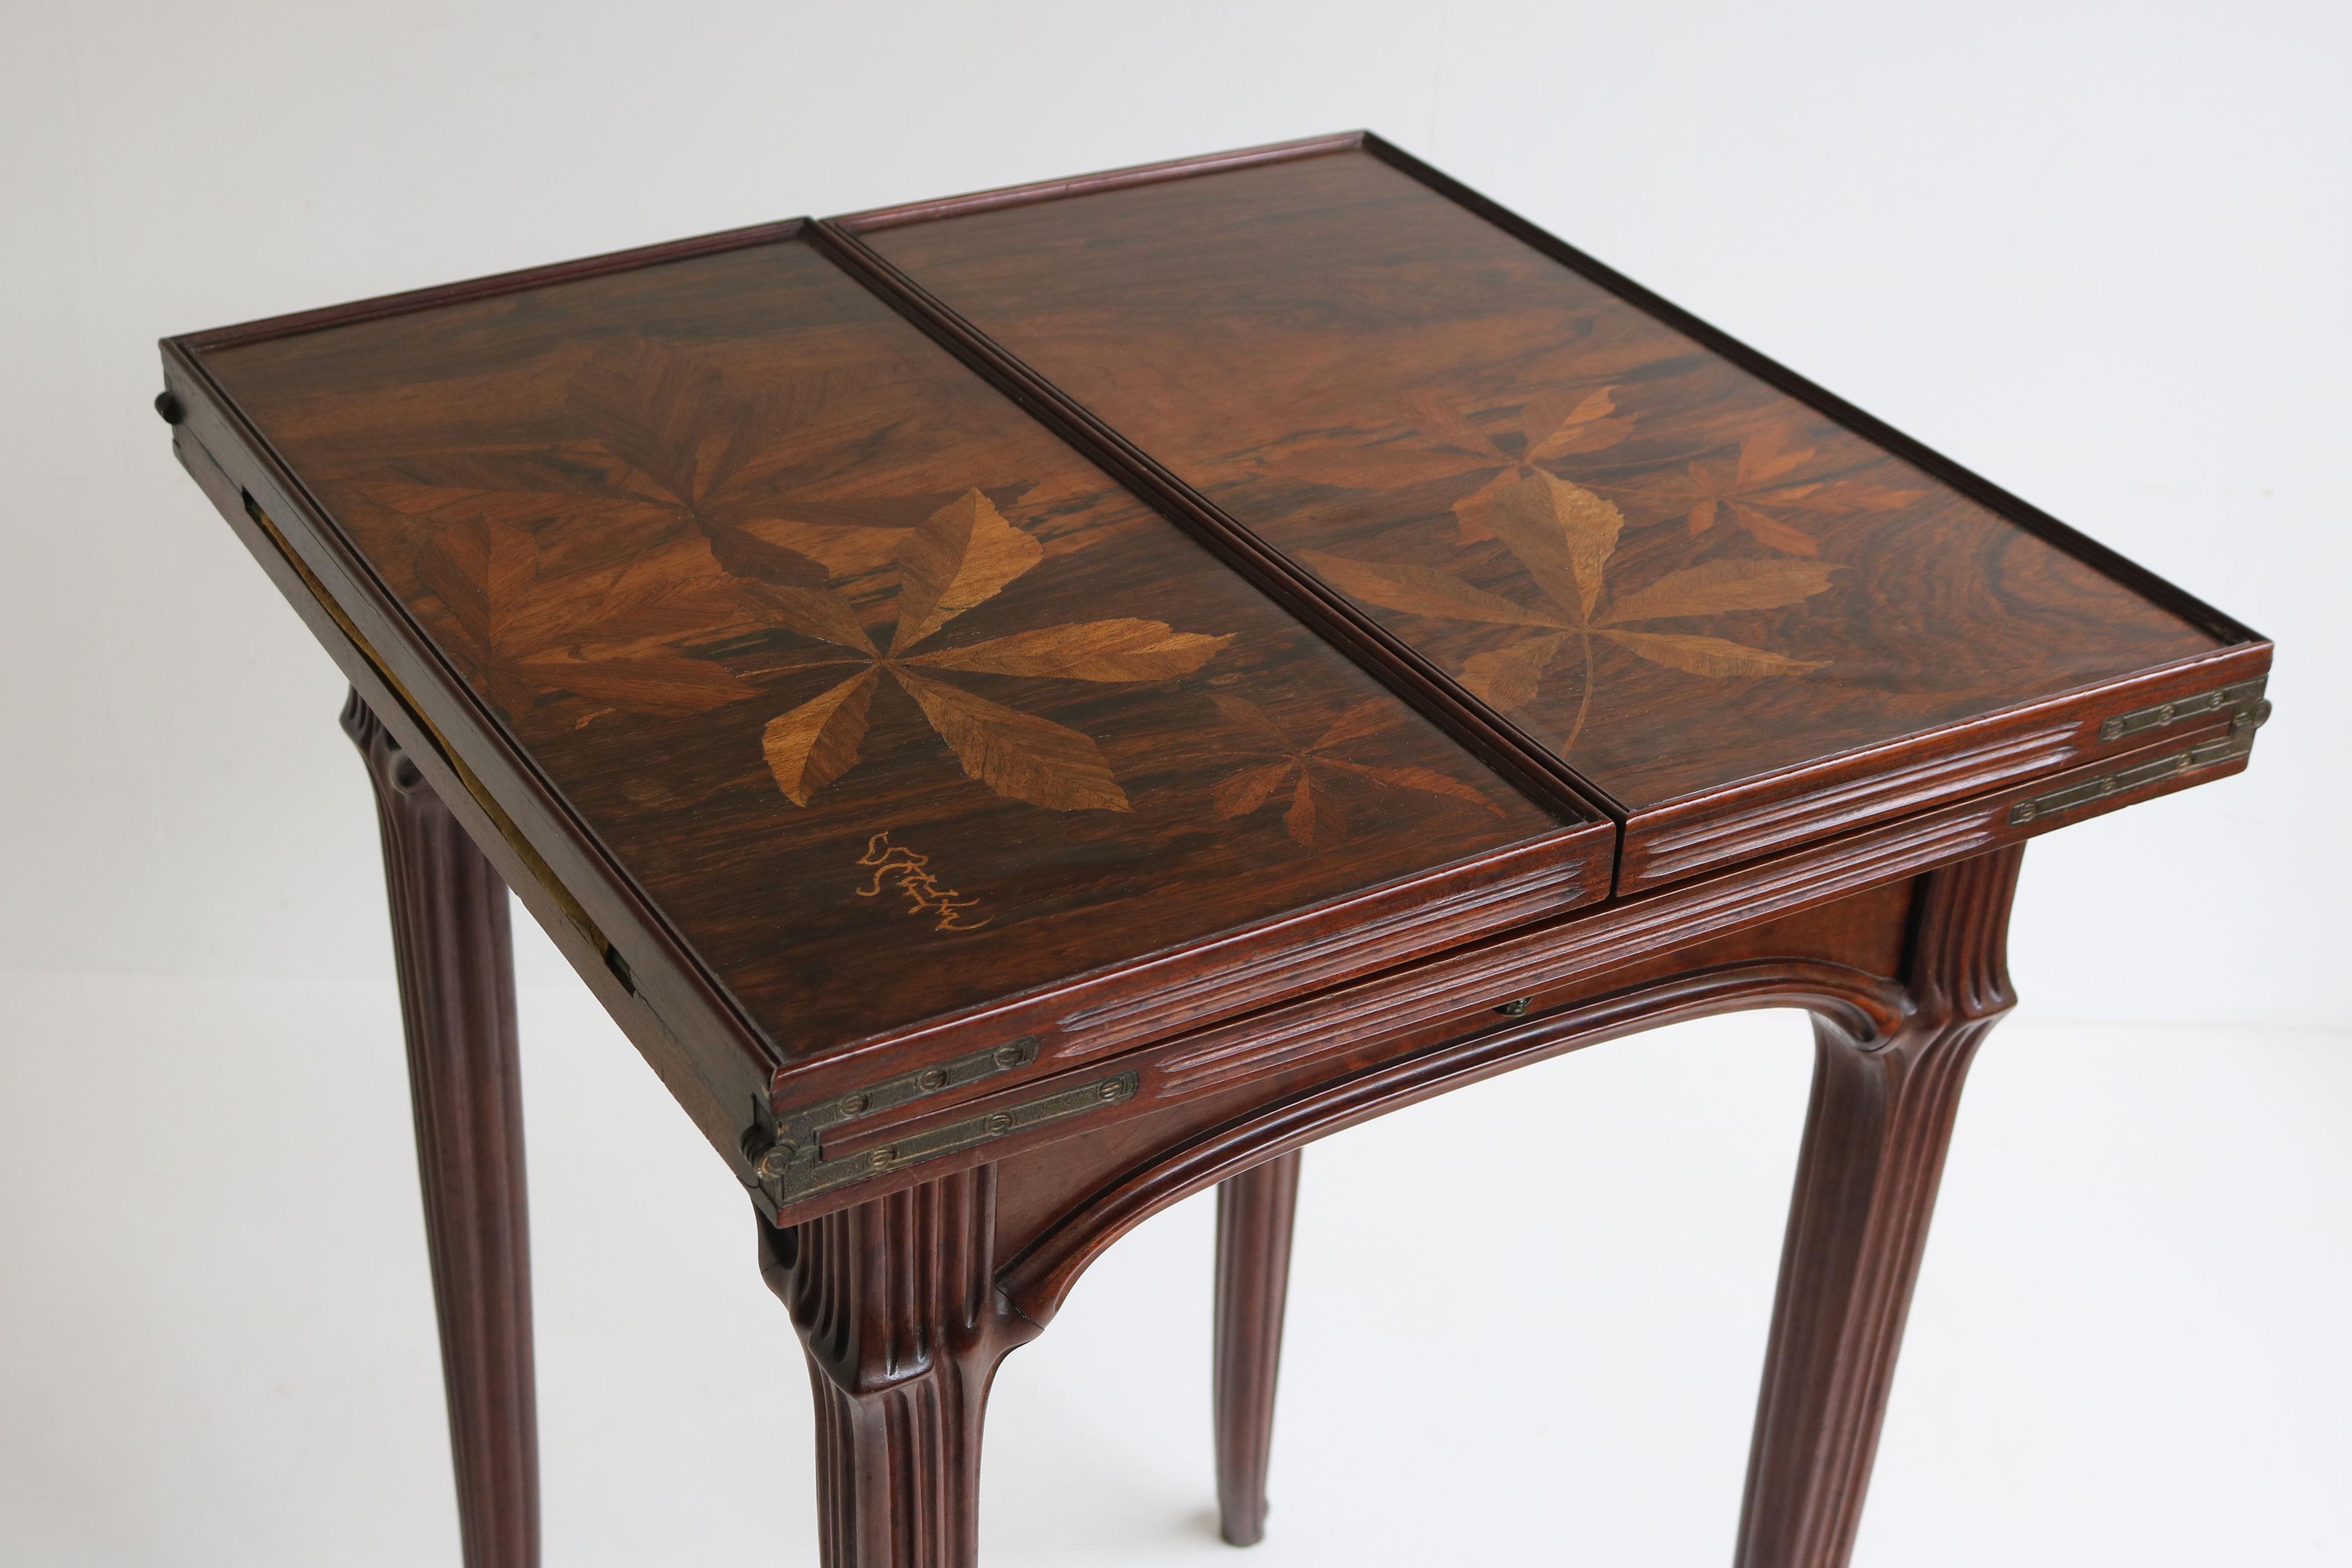 Original French Art Nouveau game table / side table by Emile Gallé 1905 chestnut For Sale 3